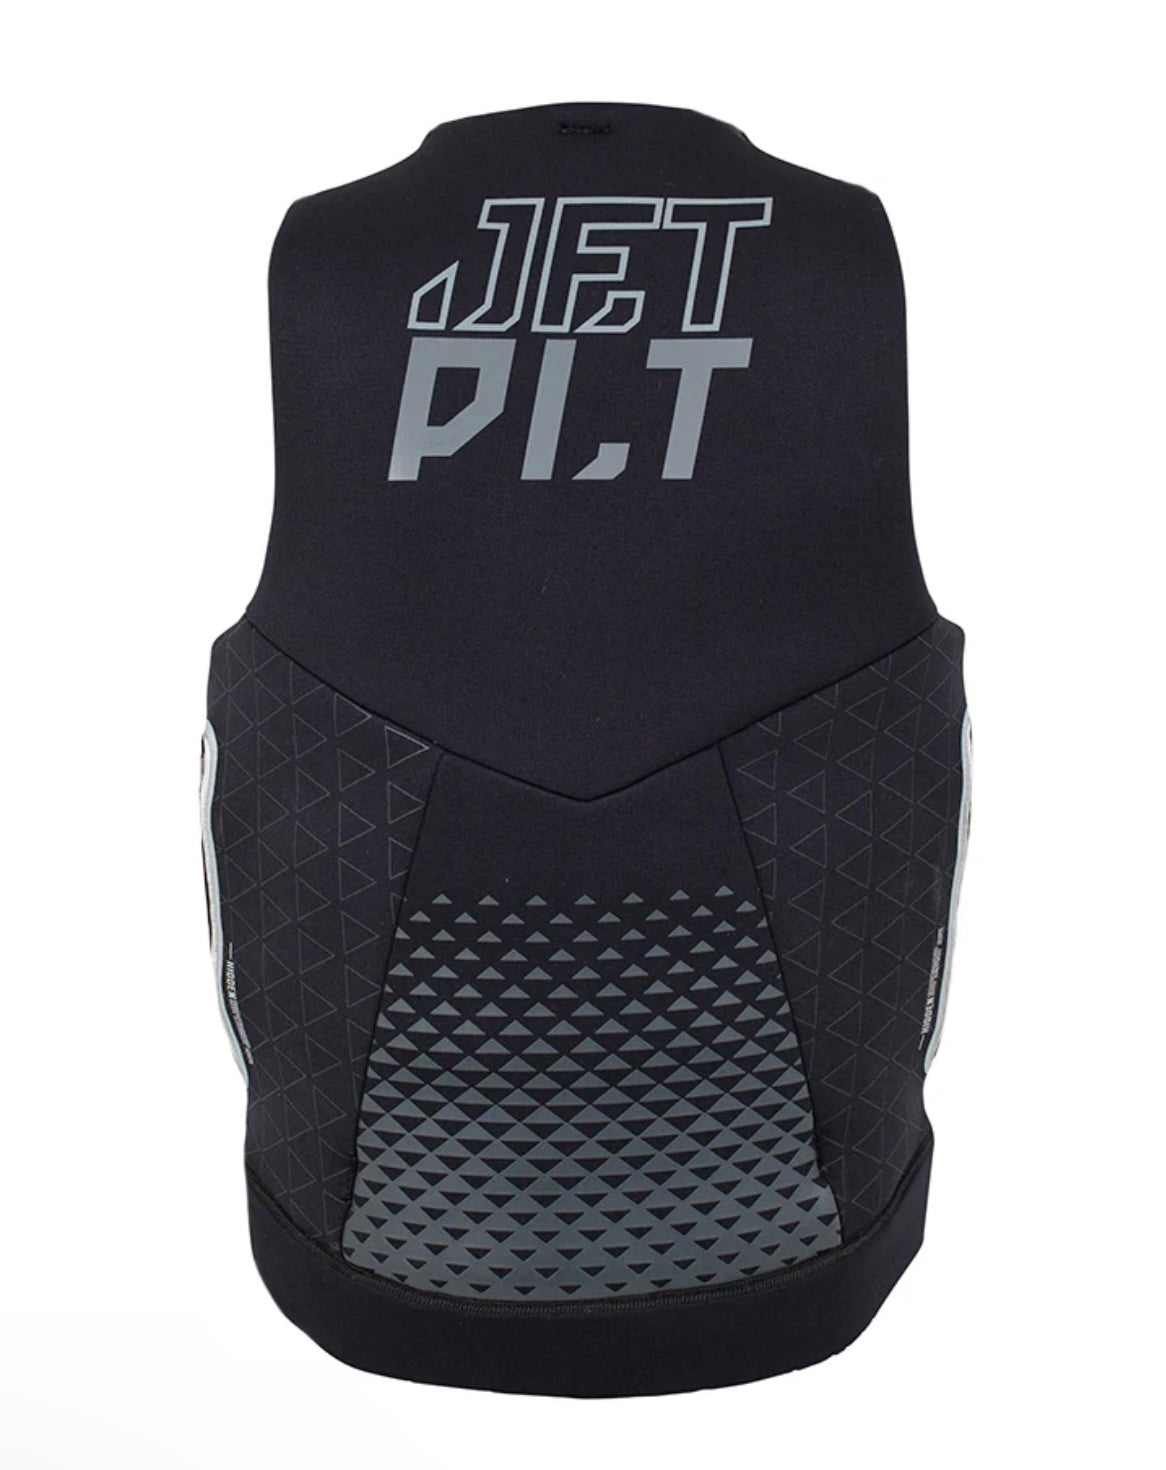 Jetpilot Cause S-Grip Life Jacket - Black